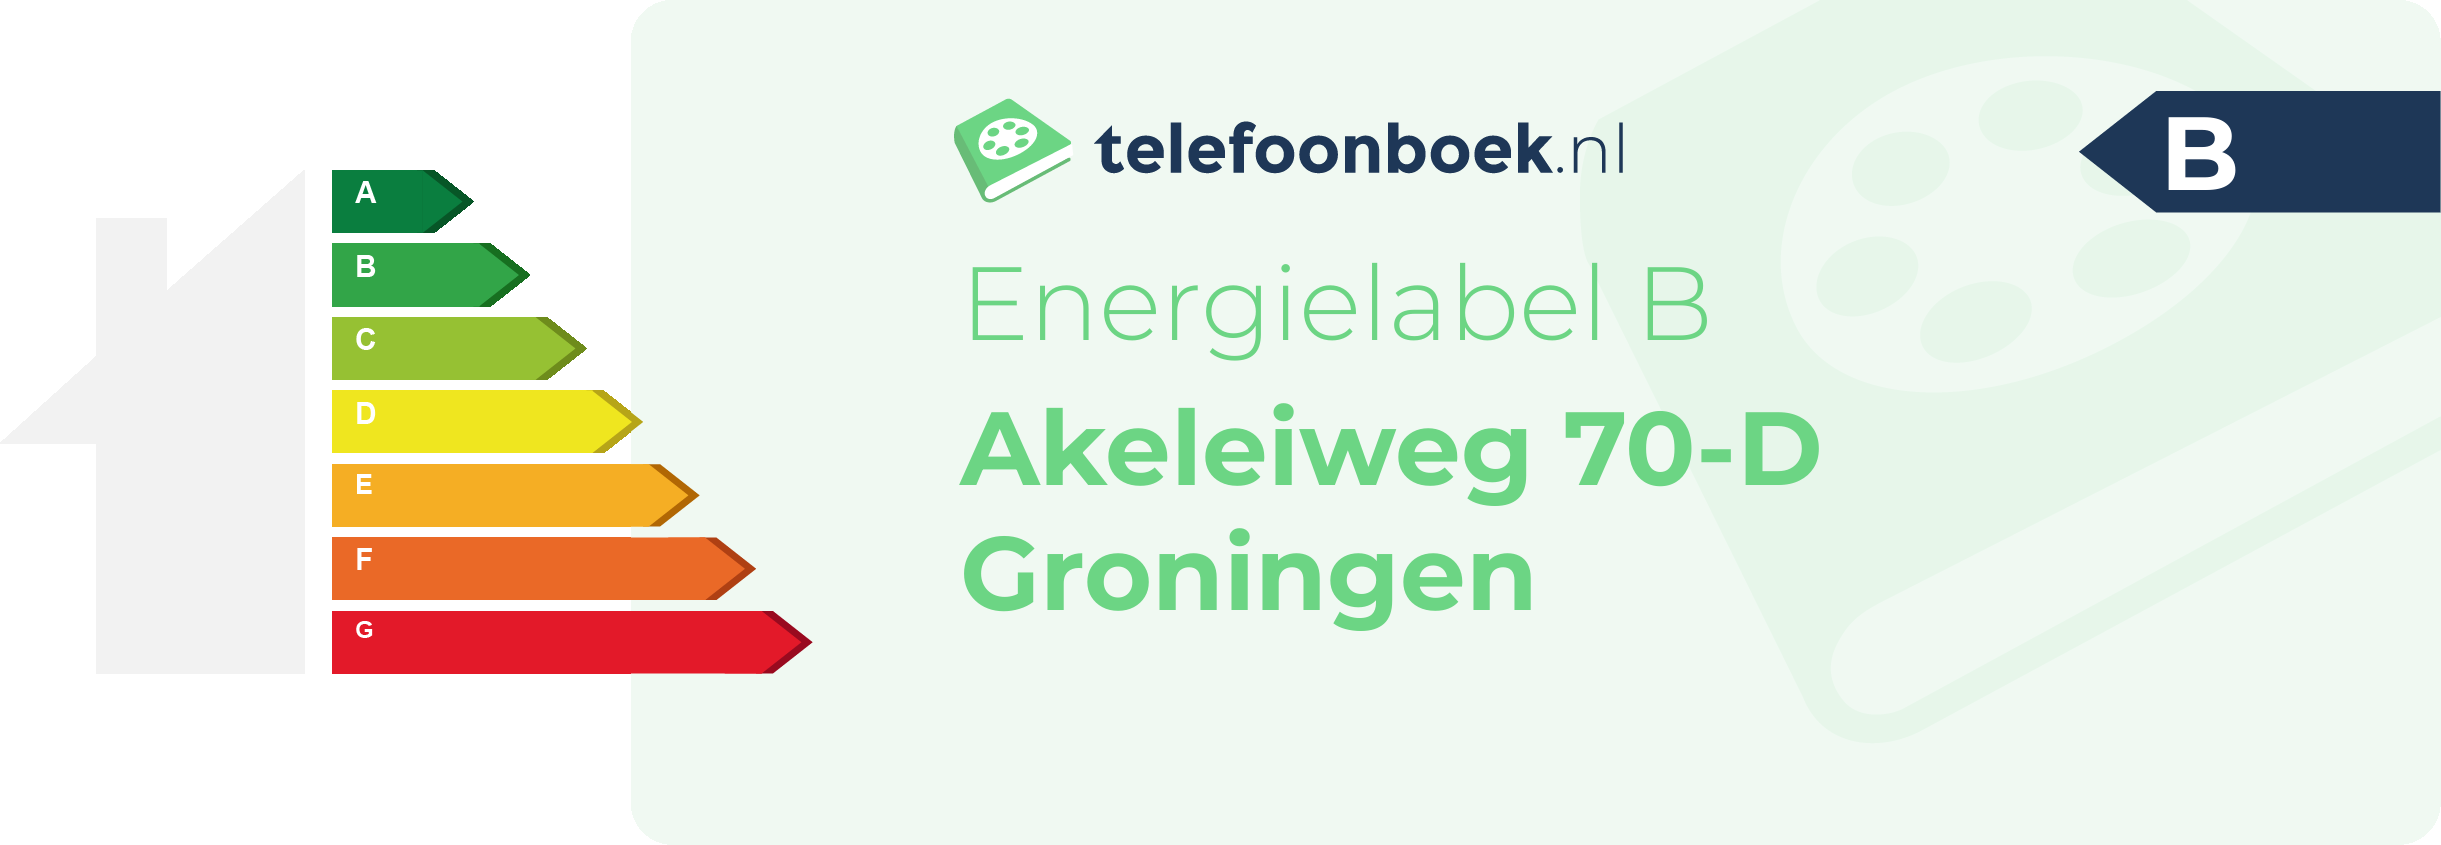 Energielabel Akeleiweg 70-D Groningen